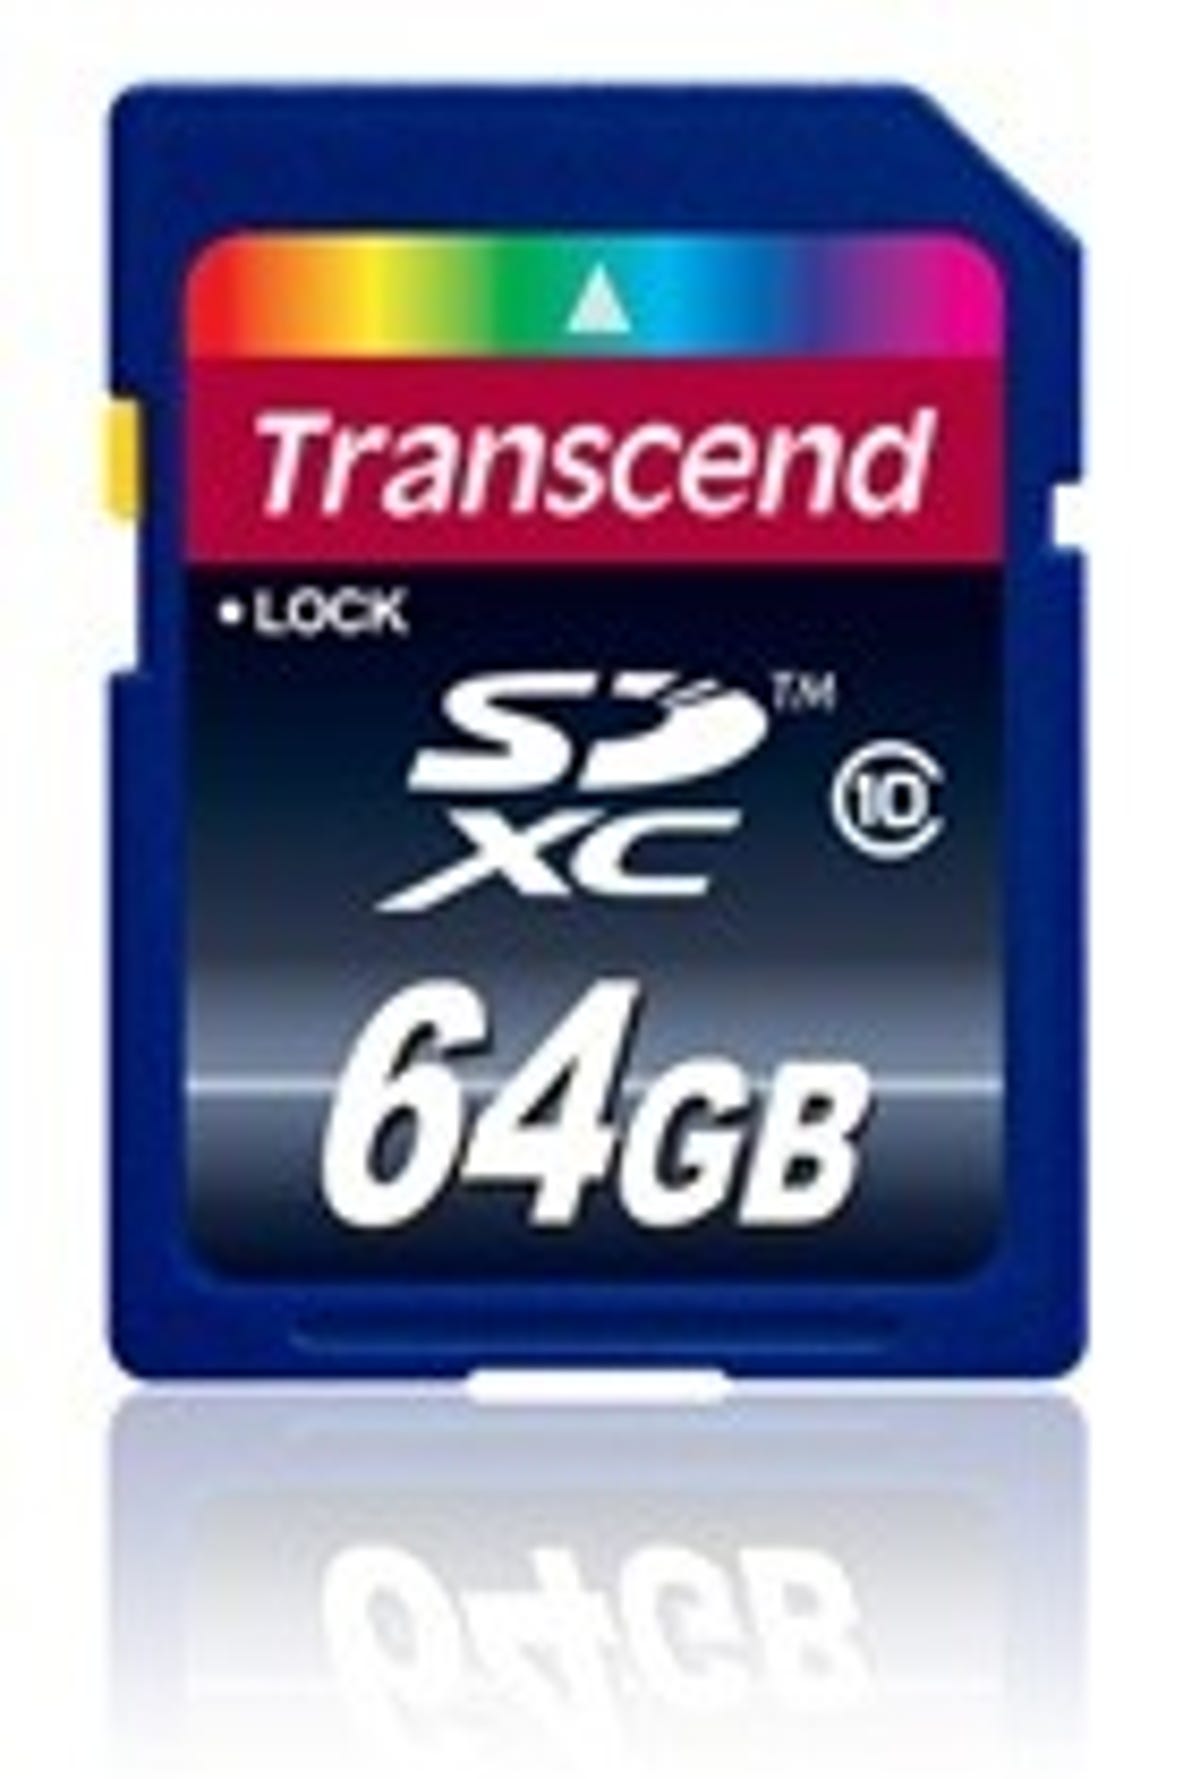 Transcend's 64GB SDXC card